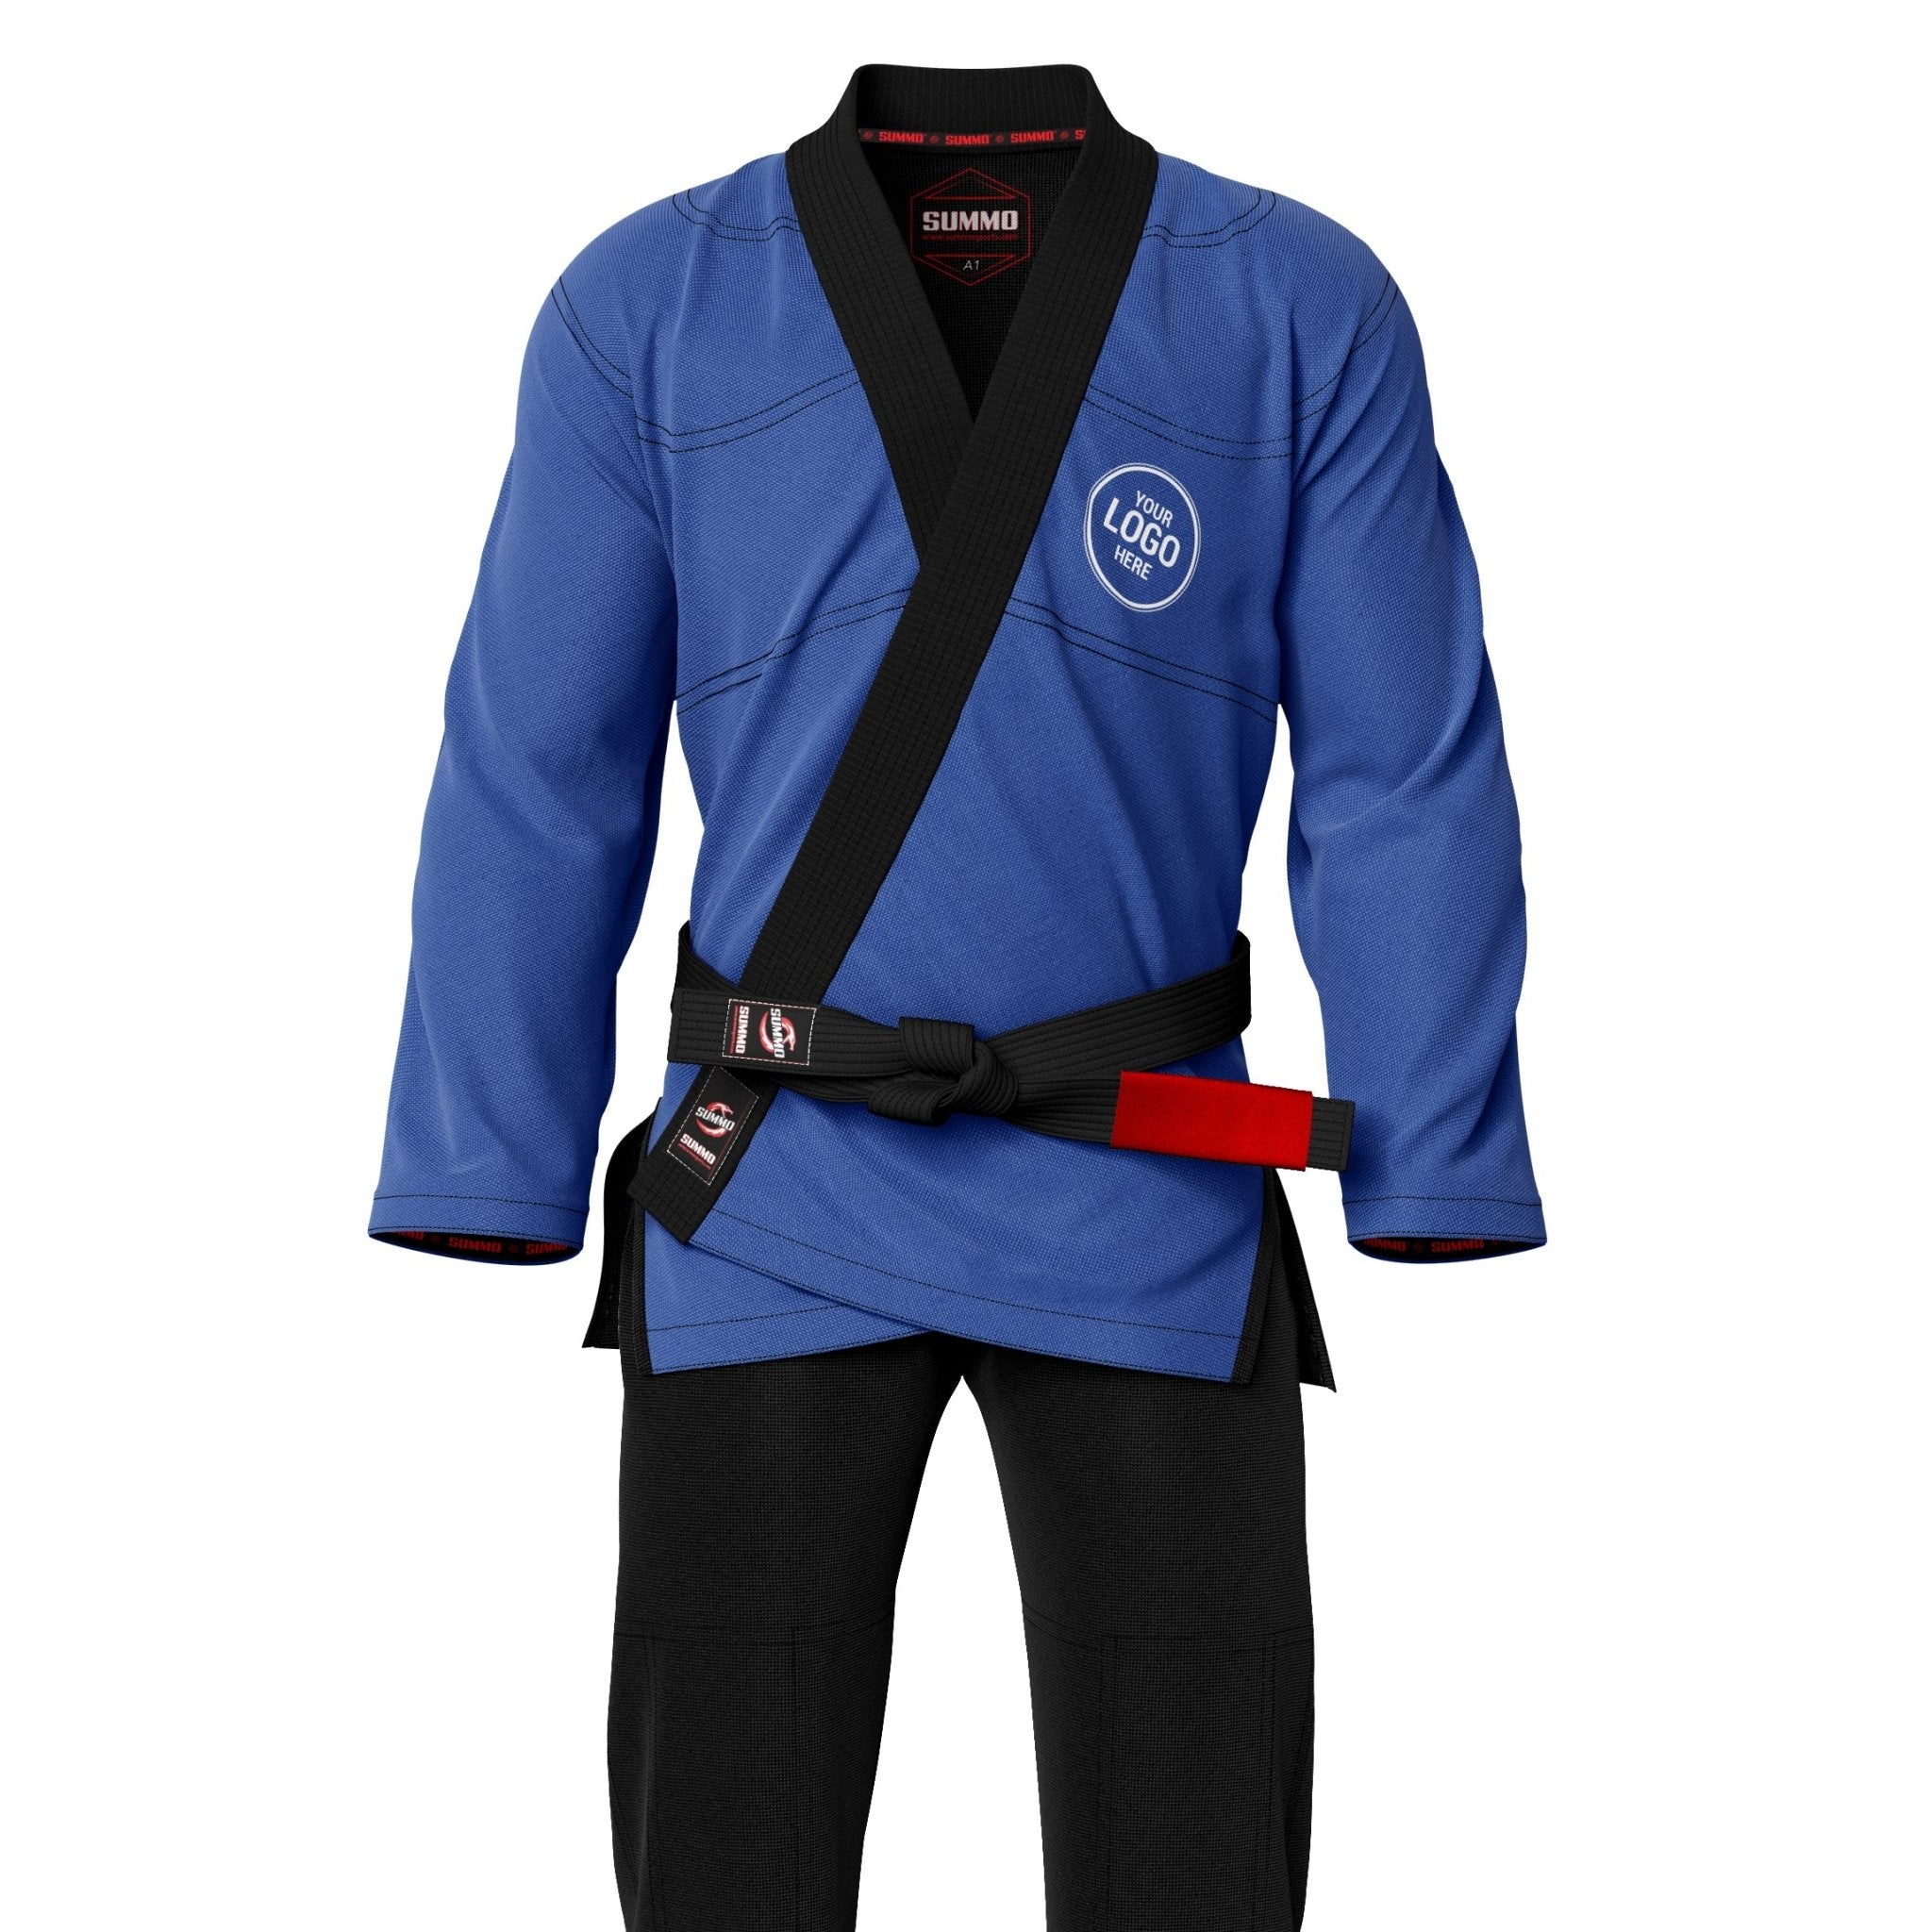 Premium Jiu-Jitsu Blue belt. –